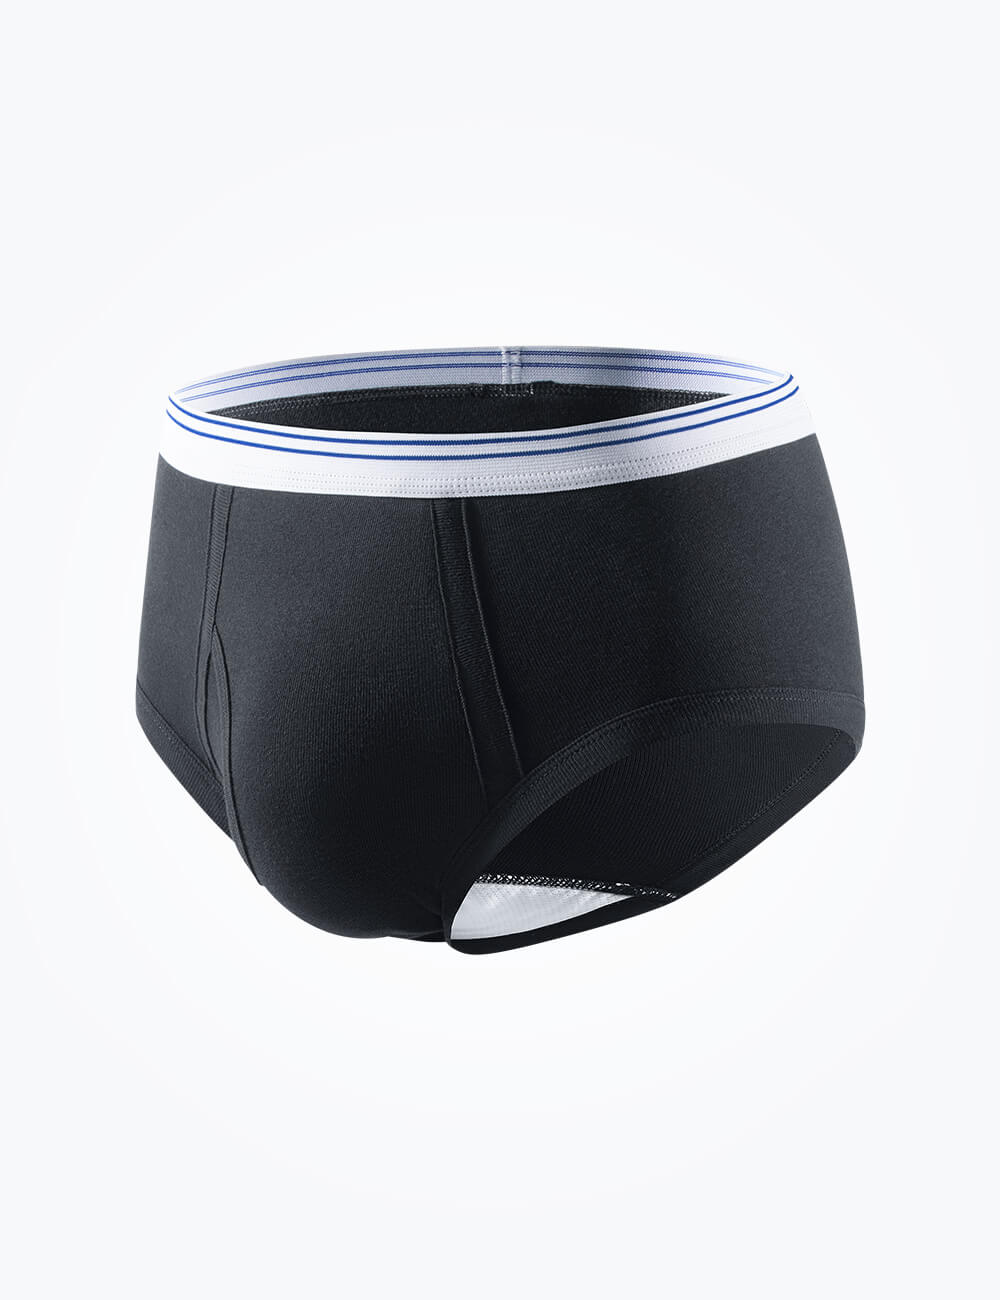 Petey's Washable Incontinence Underwear Briefs for Men, Moderate